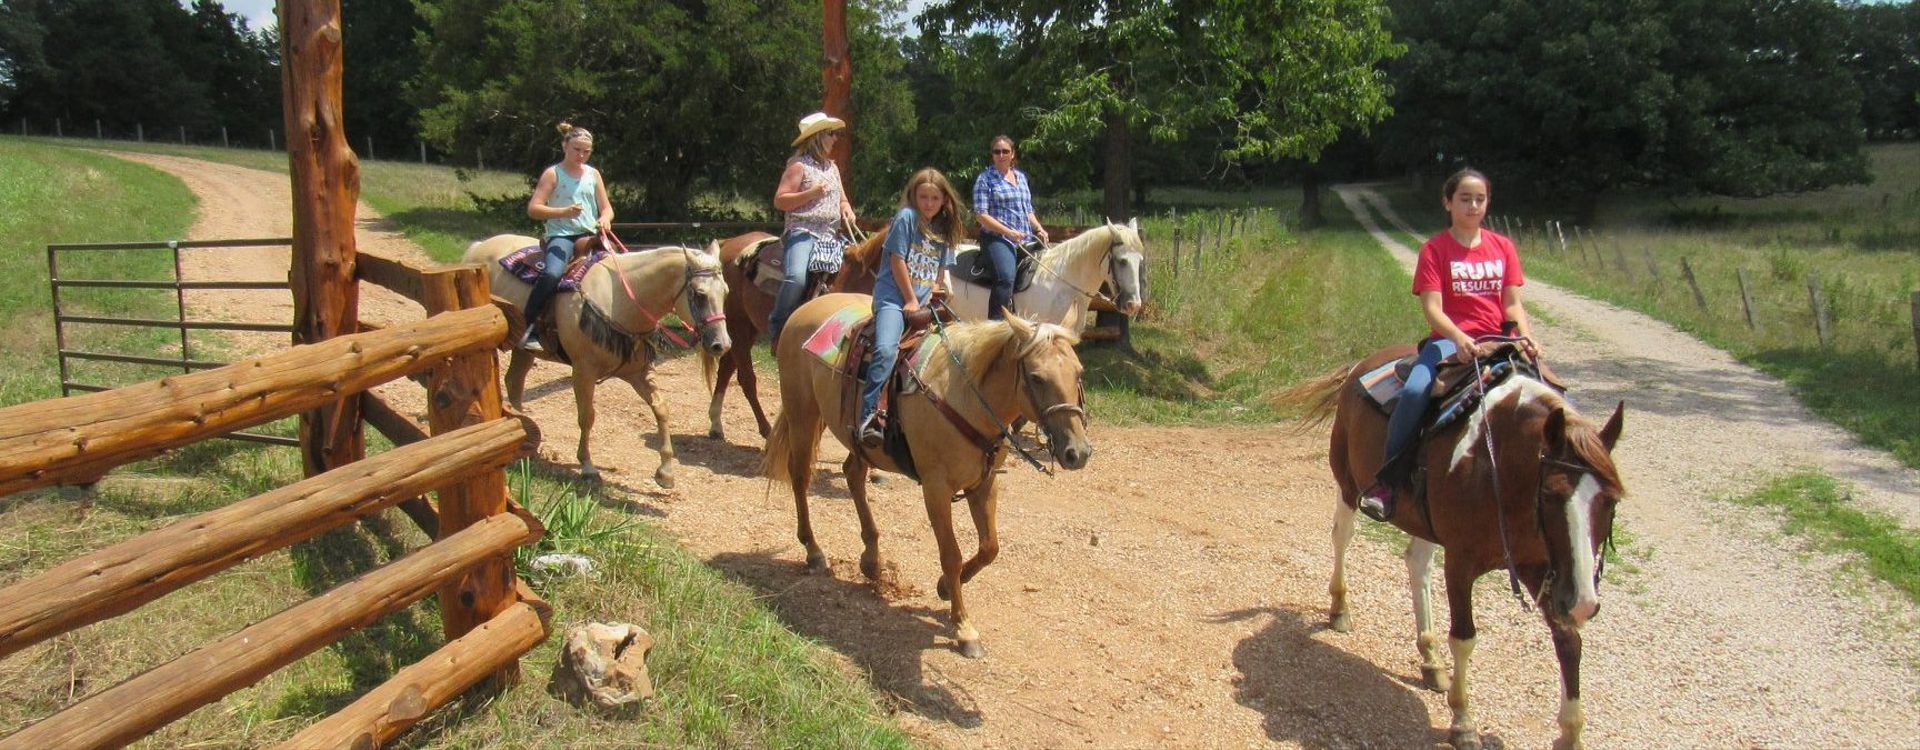 hidden-trails-rs-ranch-rides-ozarks-horseback-riding-3-group.jpg